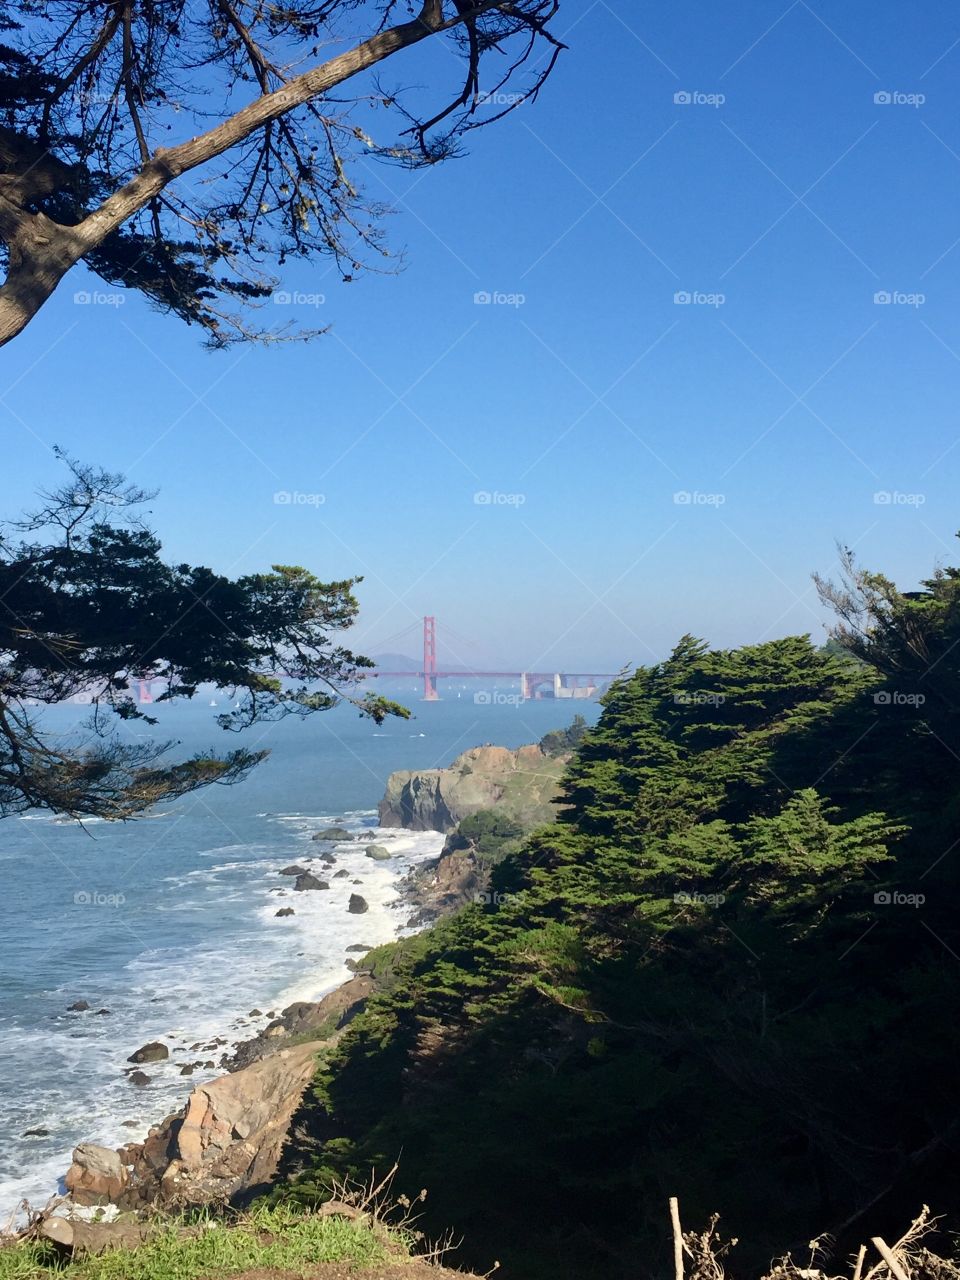 Lands Ending, Glimpse of the Golden Gate Bridge